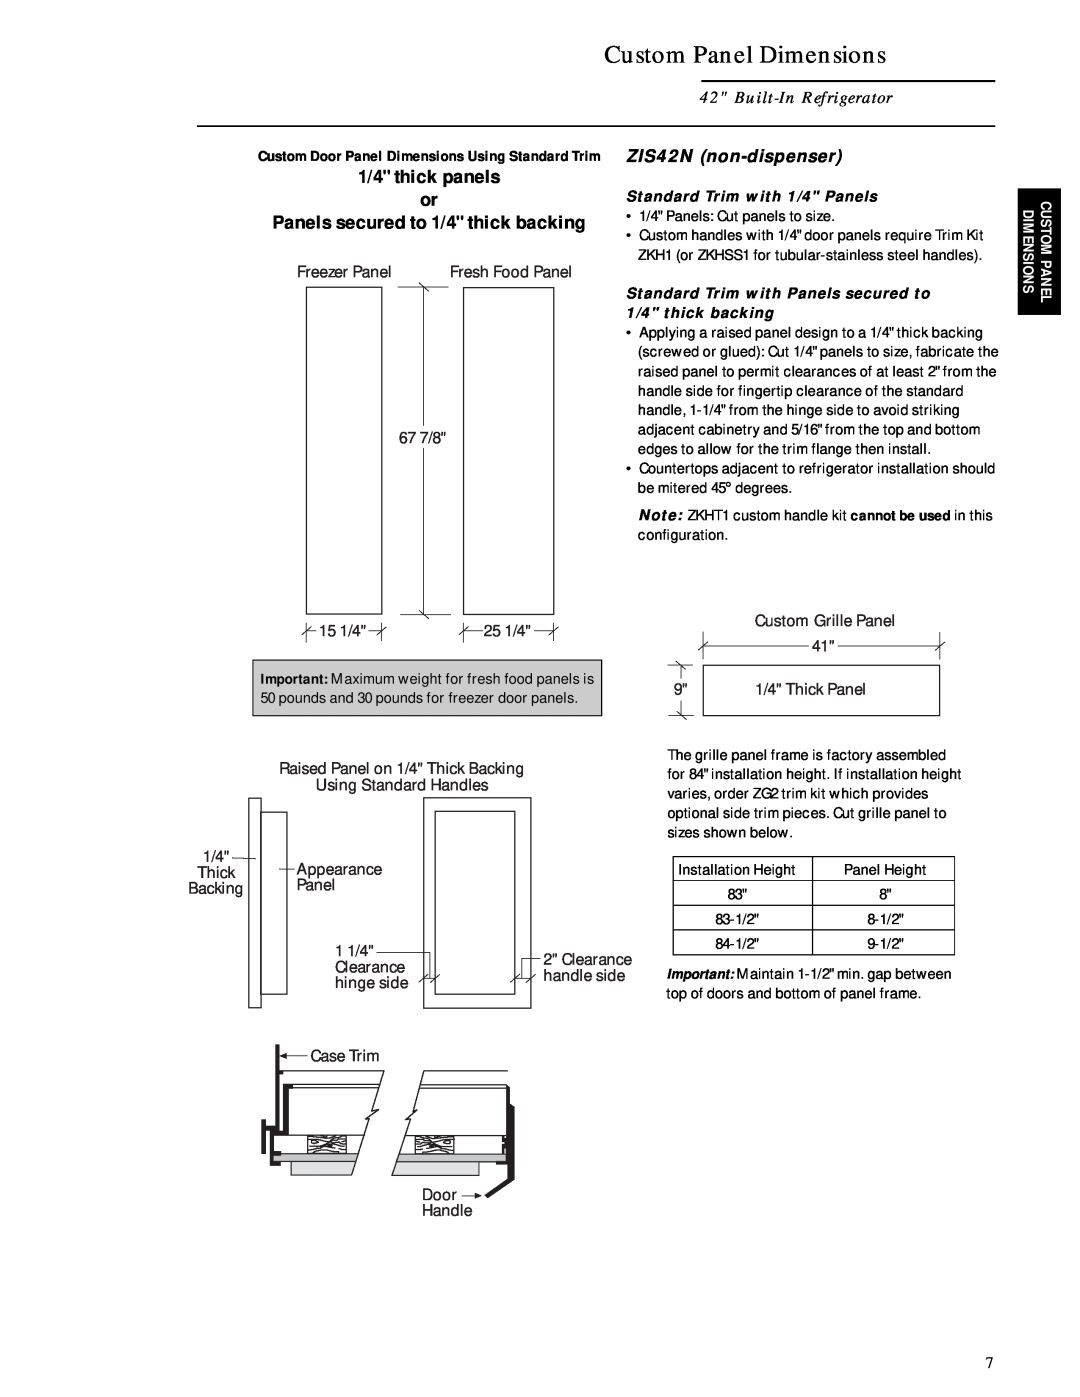 GE Monogram ZISB42D, ZISW42D Custom Panel Dimensions, Built-In Refrigerator, ZIS42N non-dispenser, 1/4 thick panels 